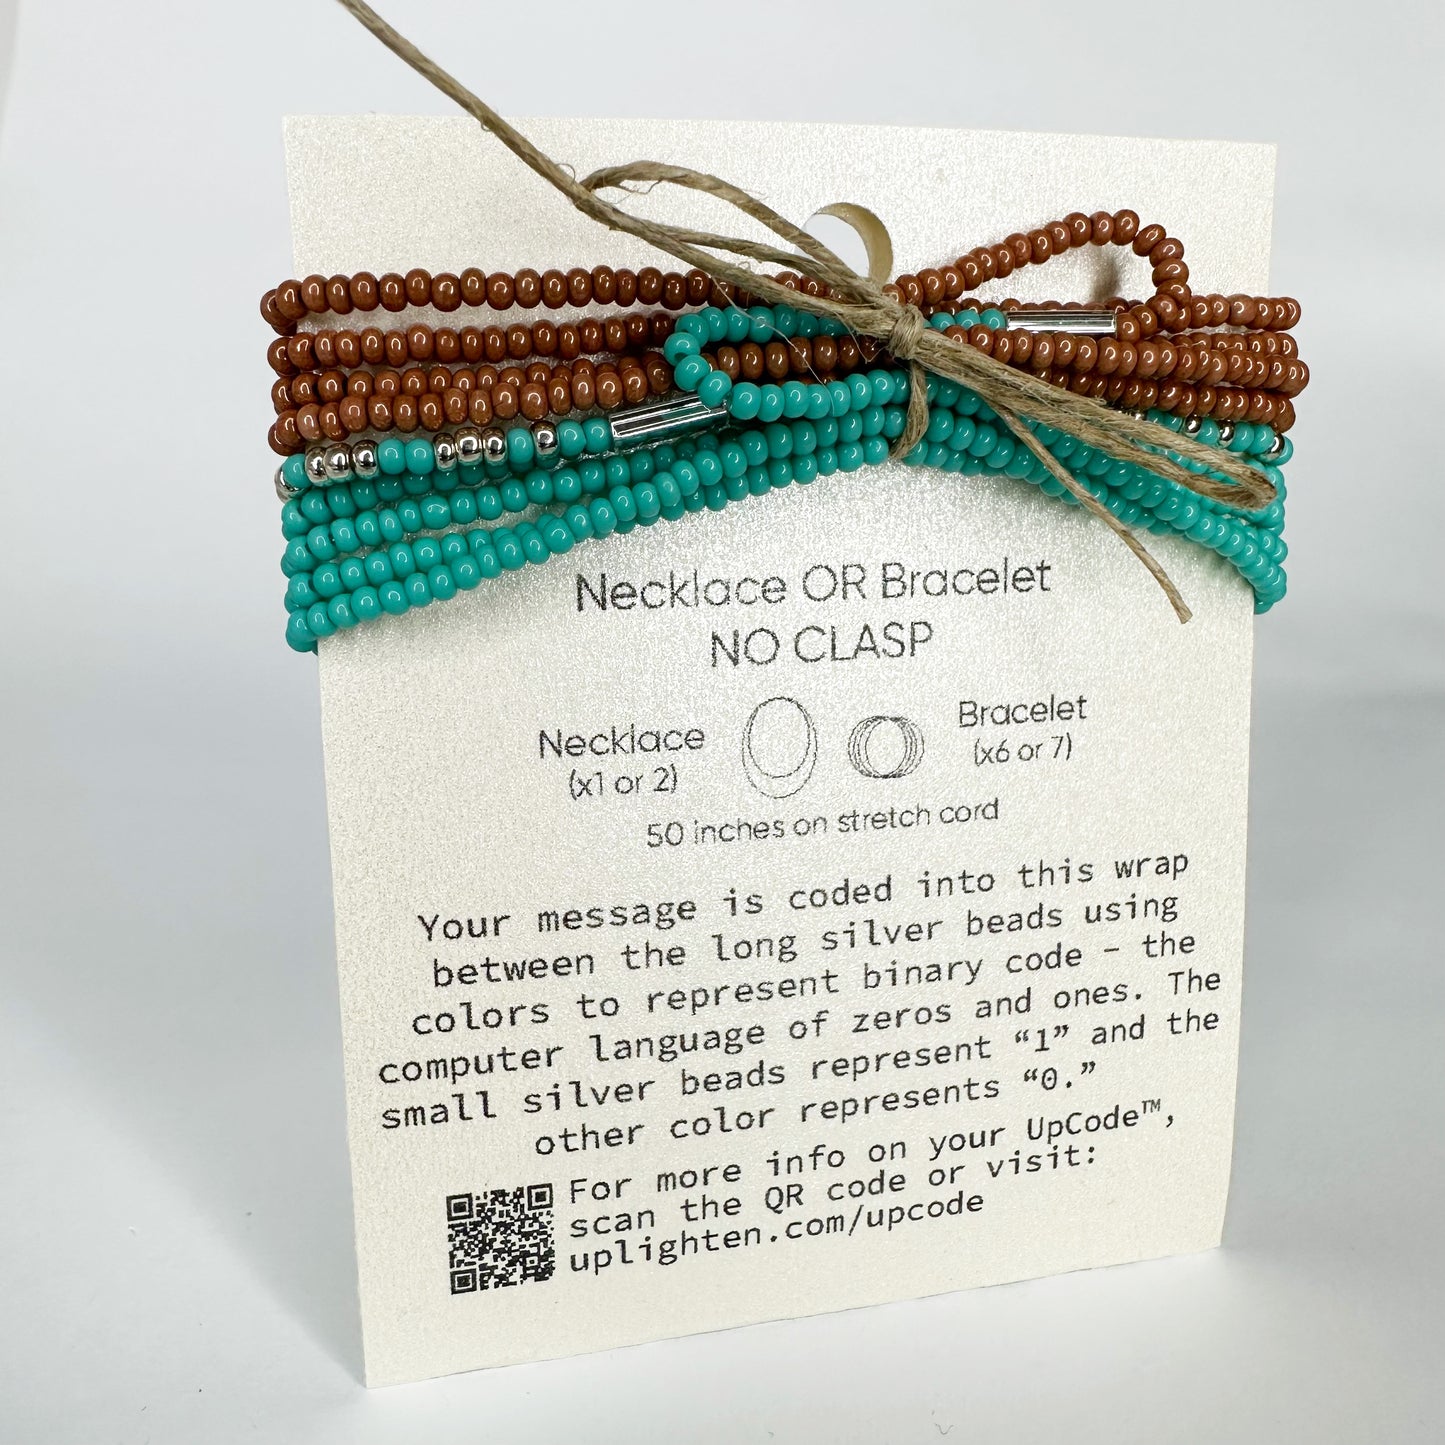 "be present" UpCode Necklace / Bracelet Wrap